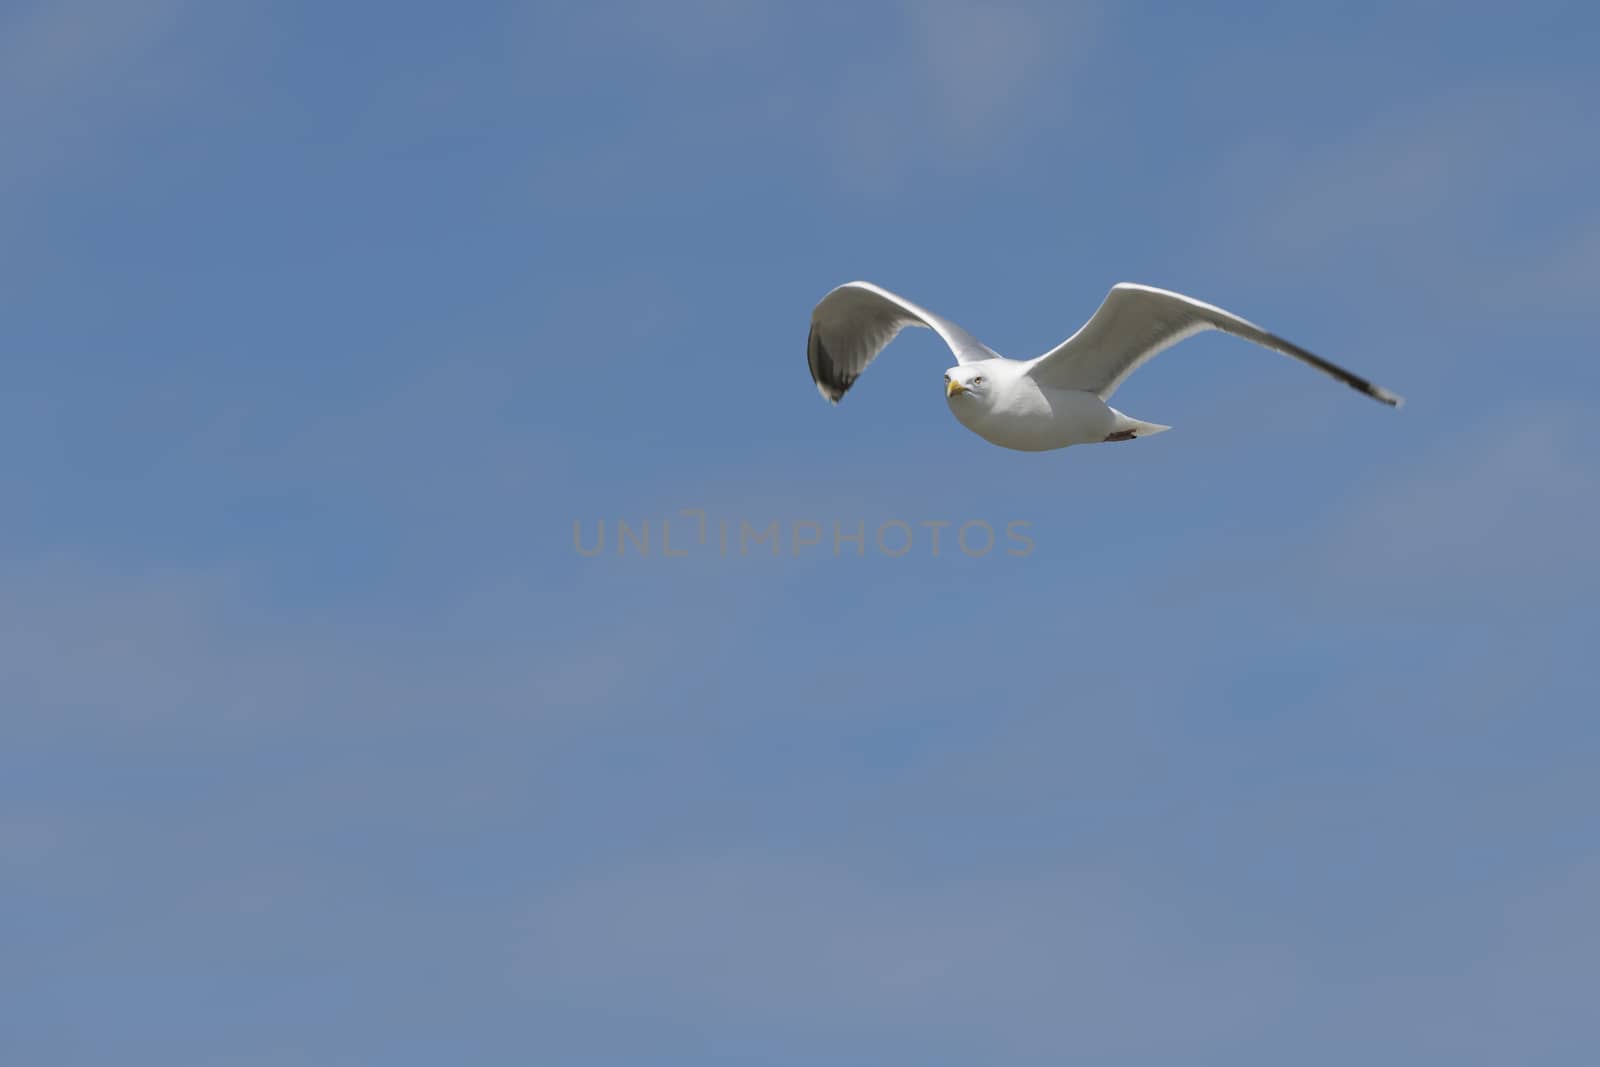 Seabird the Seagull family name laridae in flight against a blue sky
